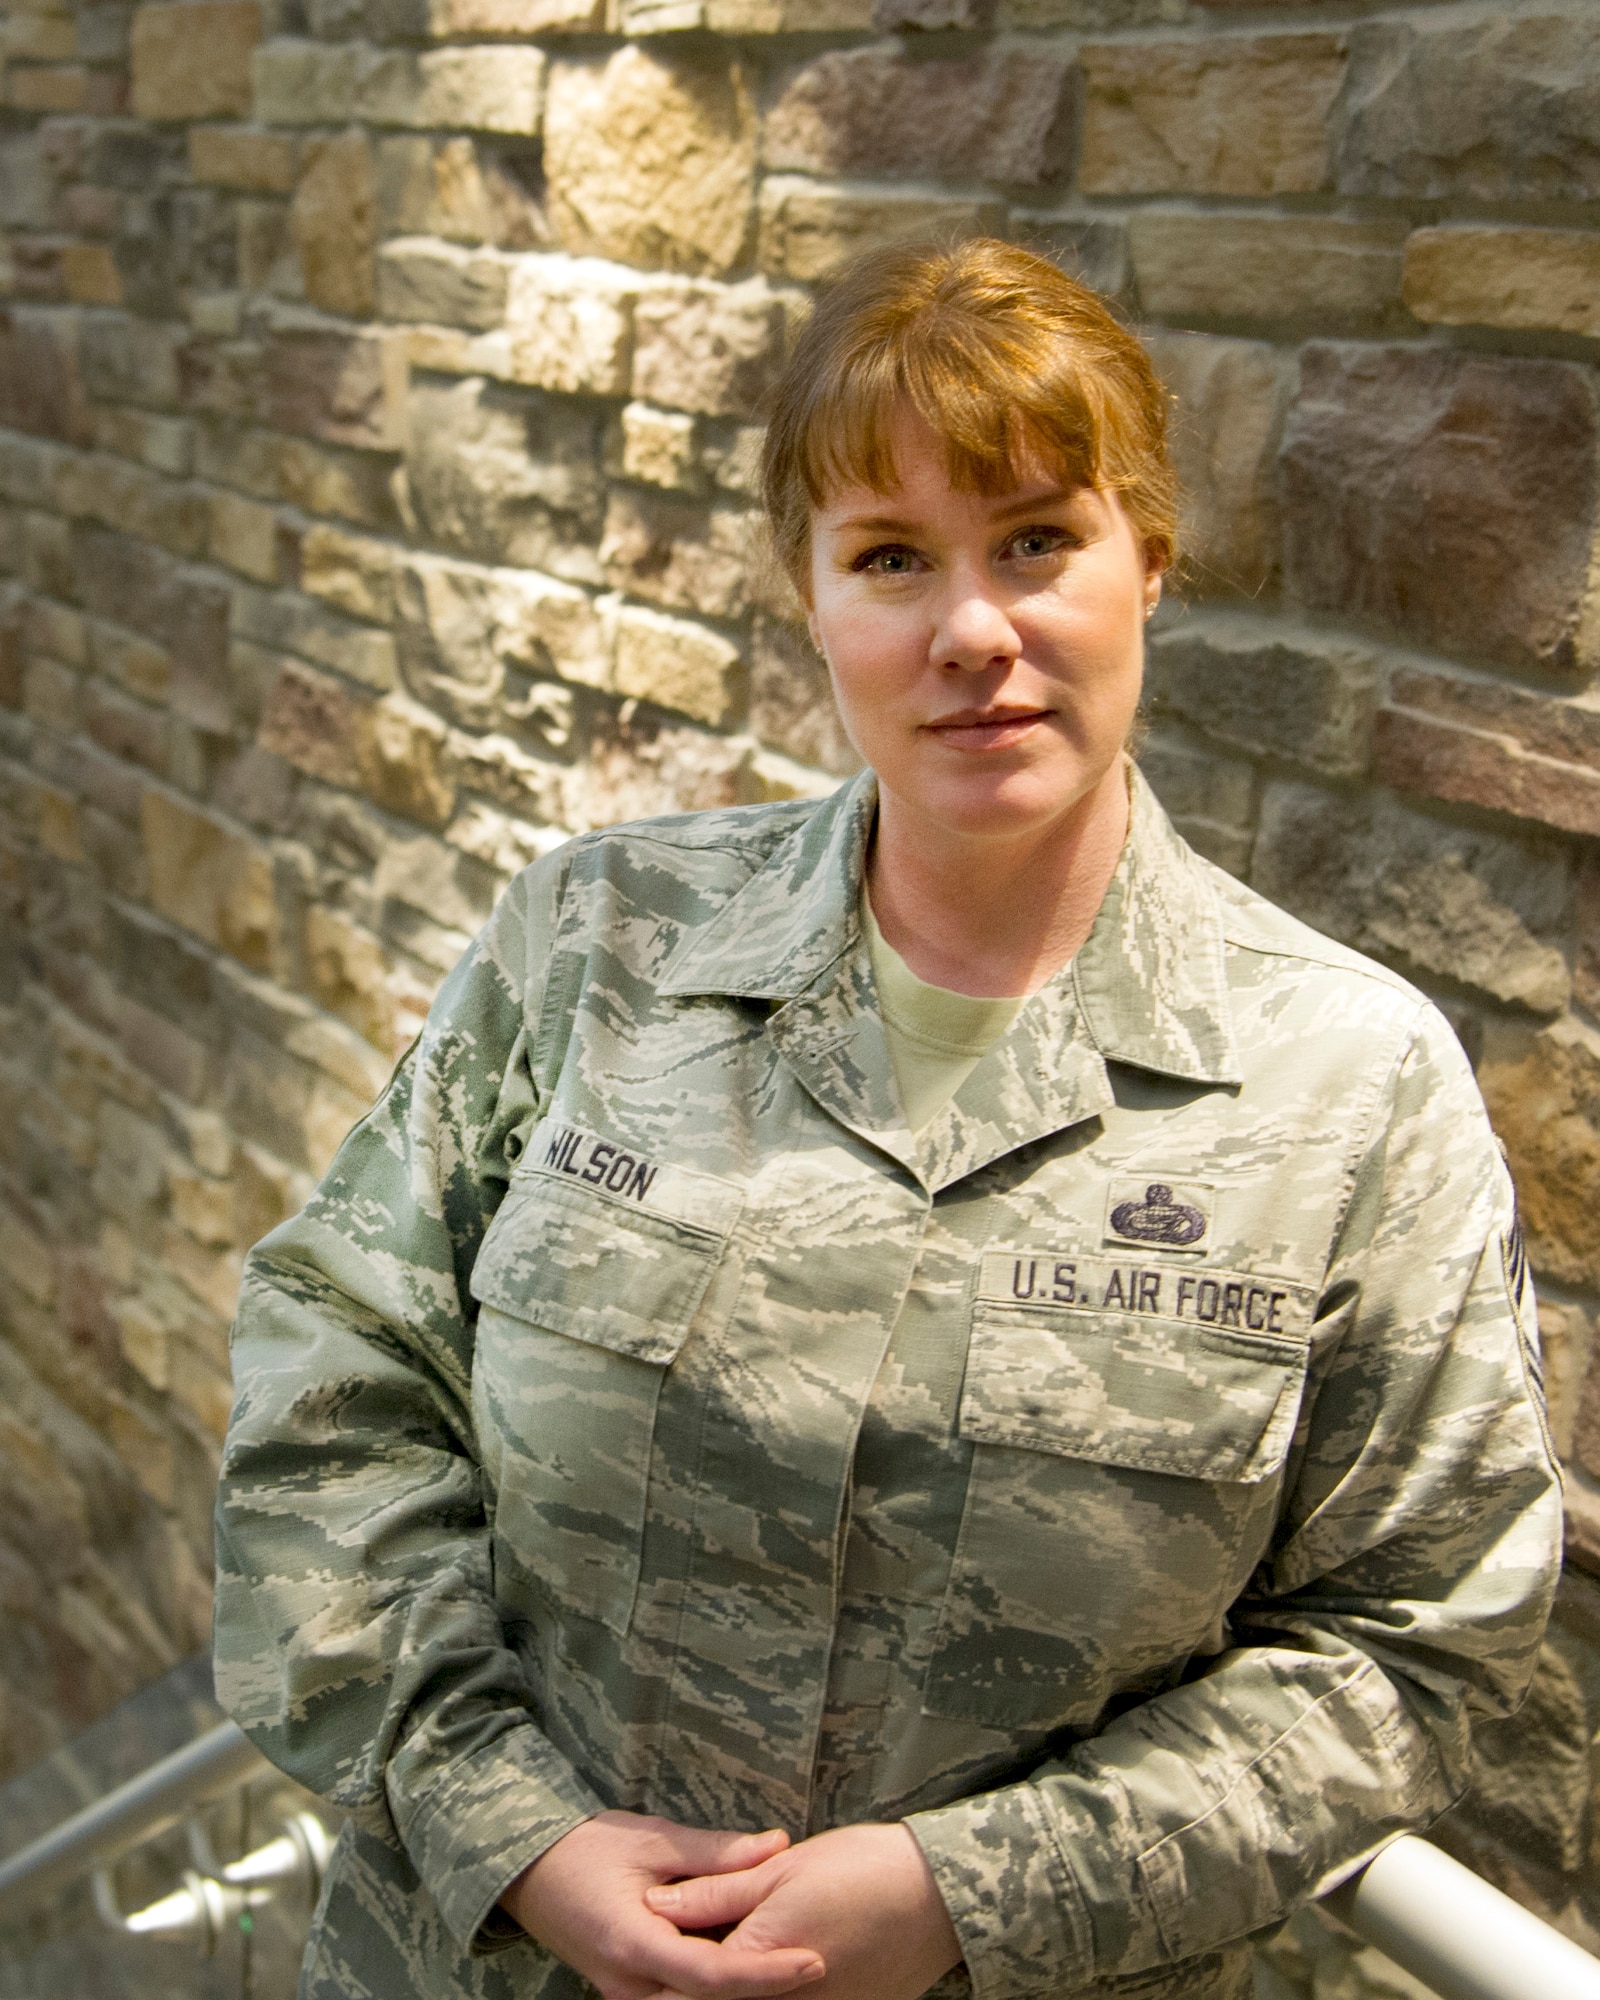 Chief Master Sgt. Laura Wilson